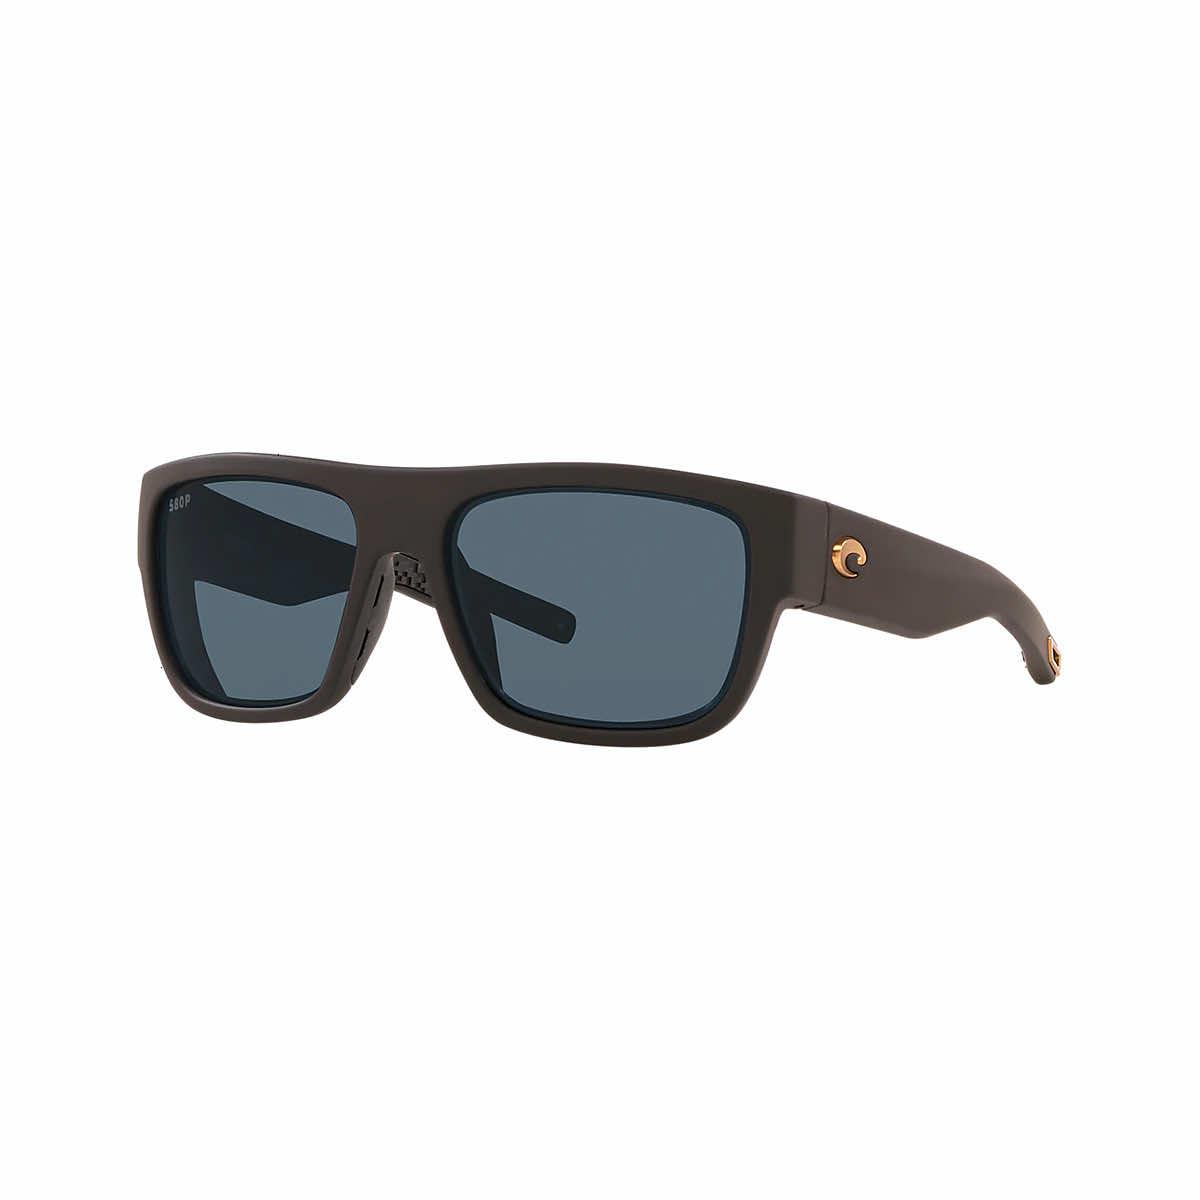  Sampan 580p Sunglasses - Polarized